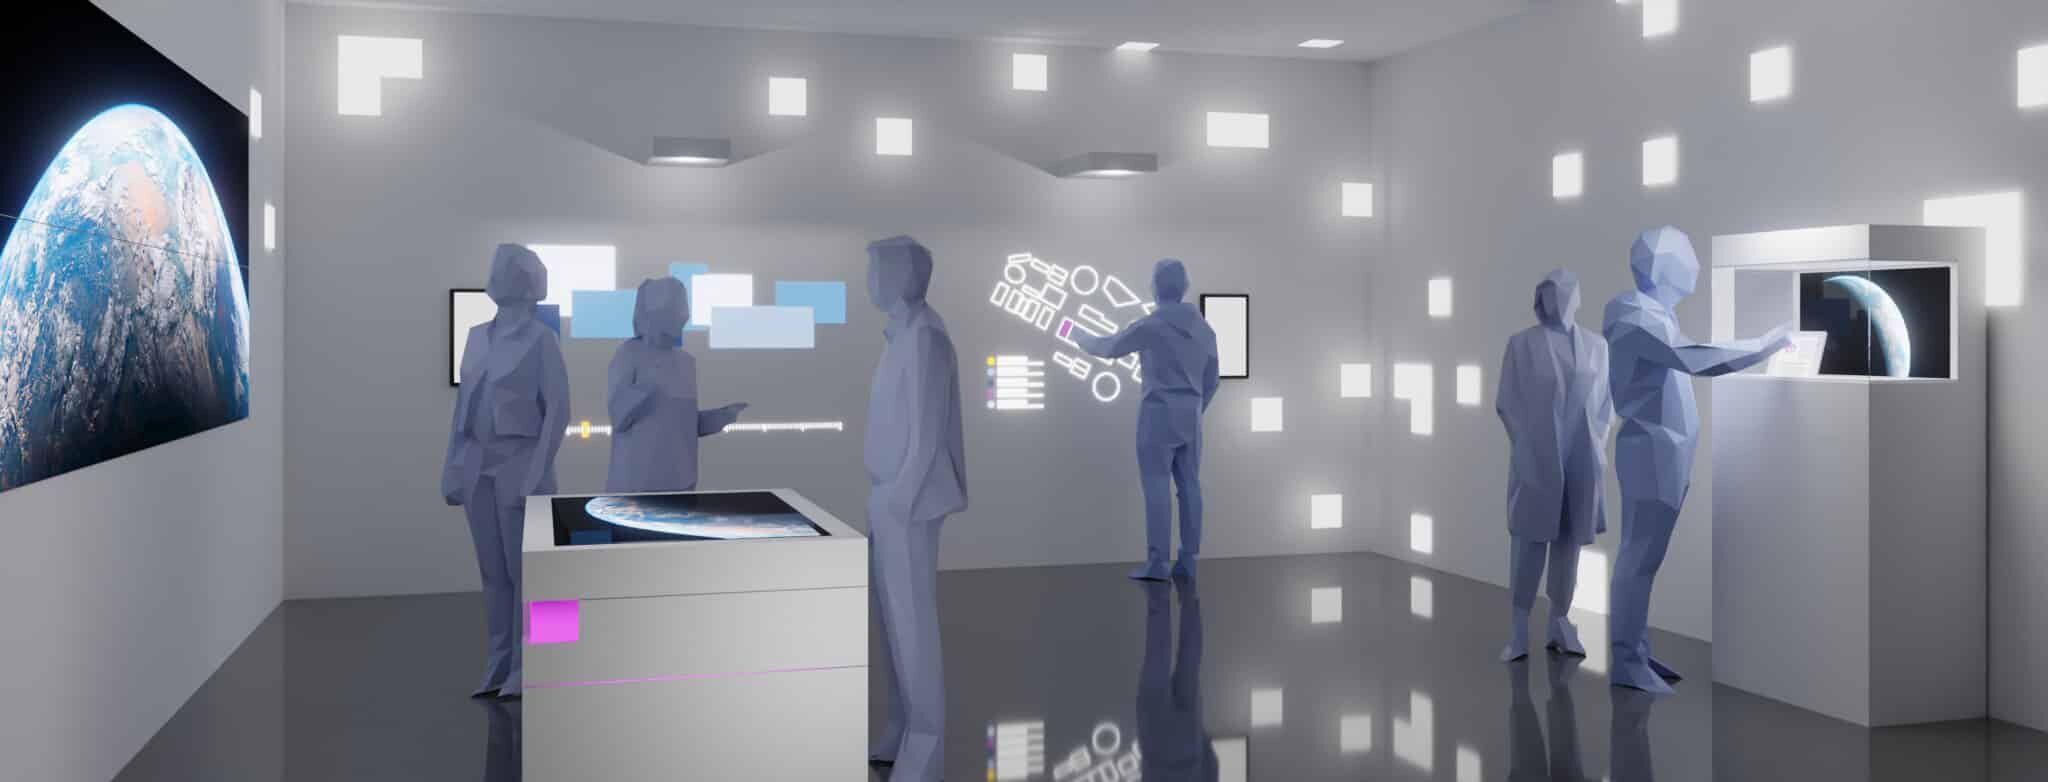 interactive showroom for companies